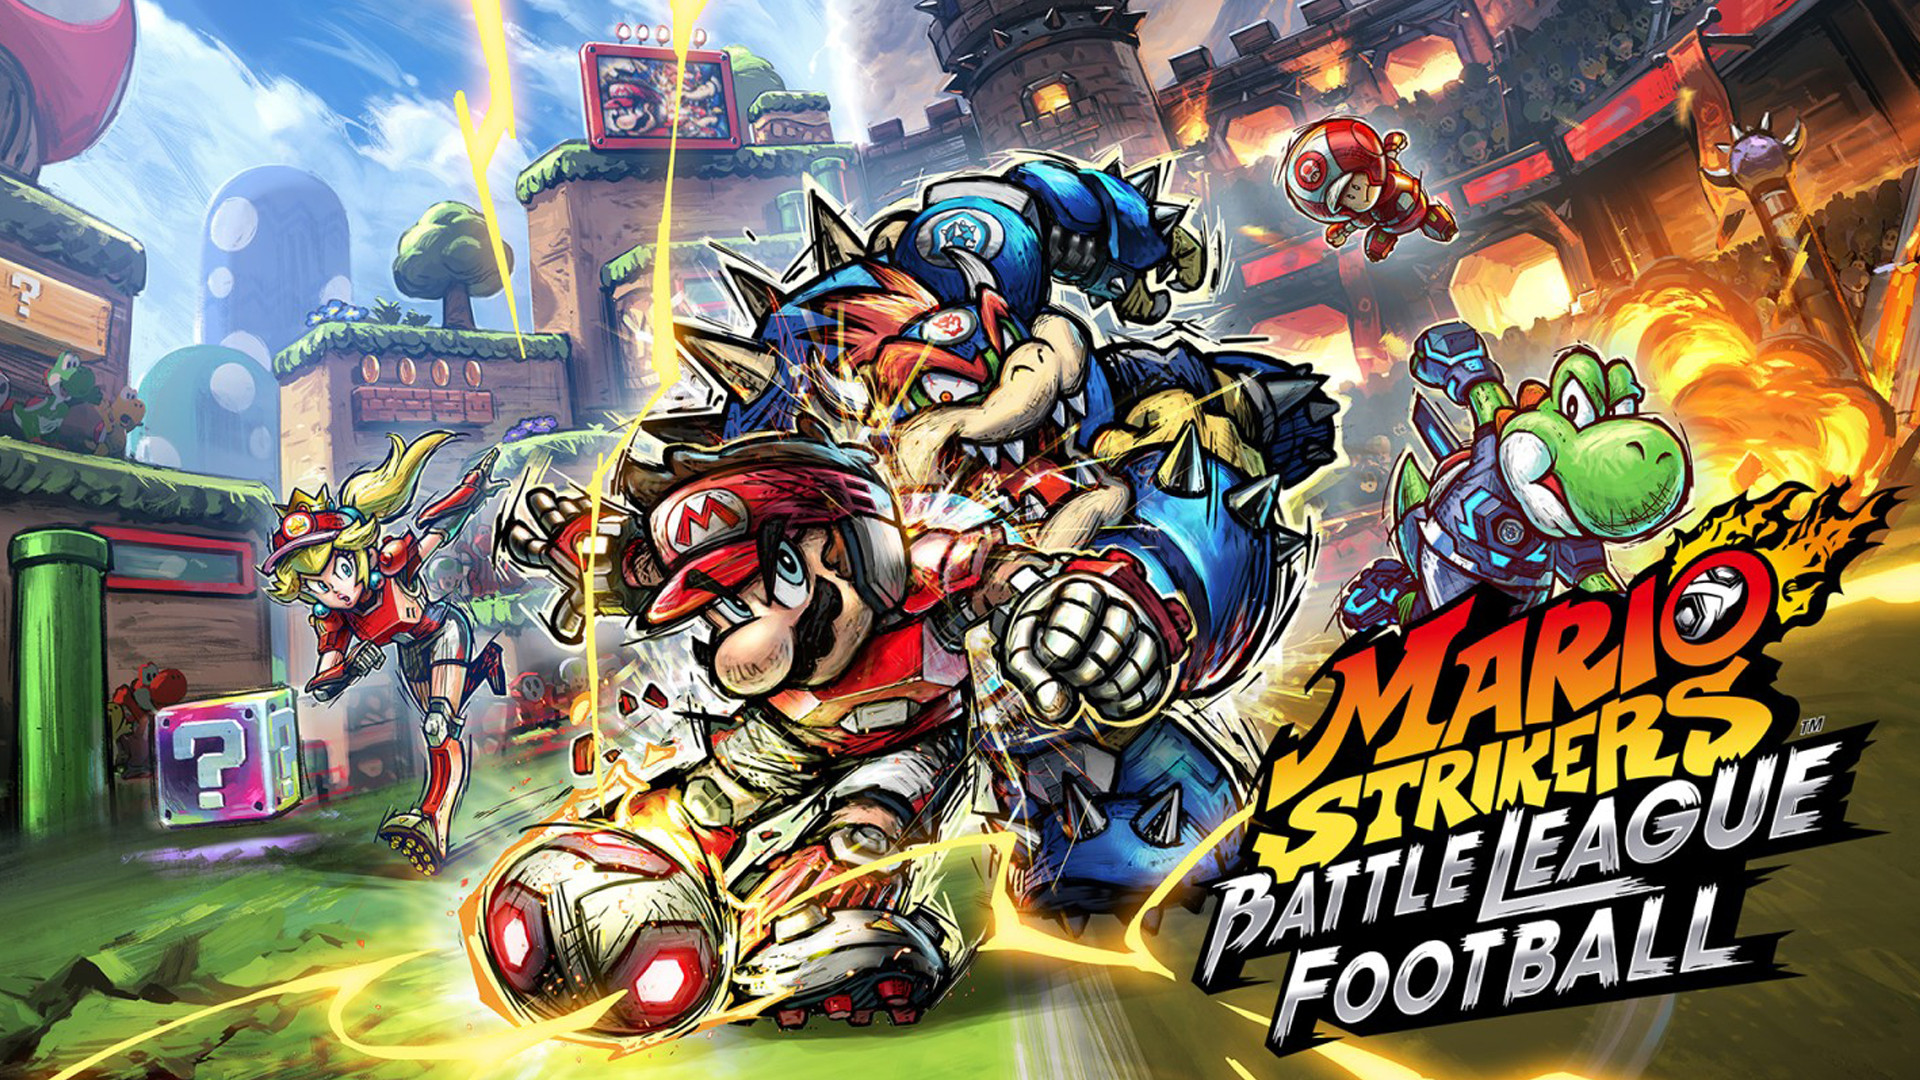 Quand sort Mario Strikers Battle League Football ?